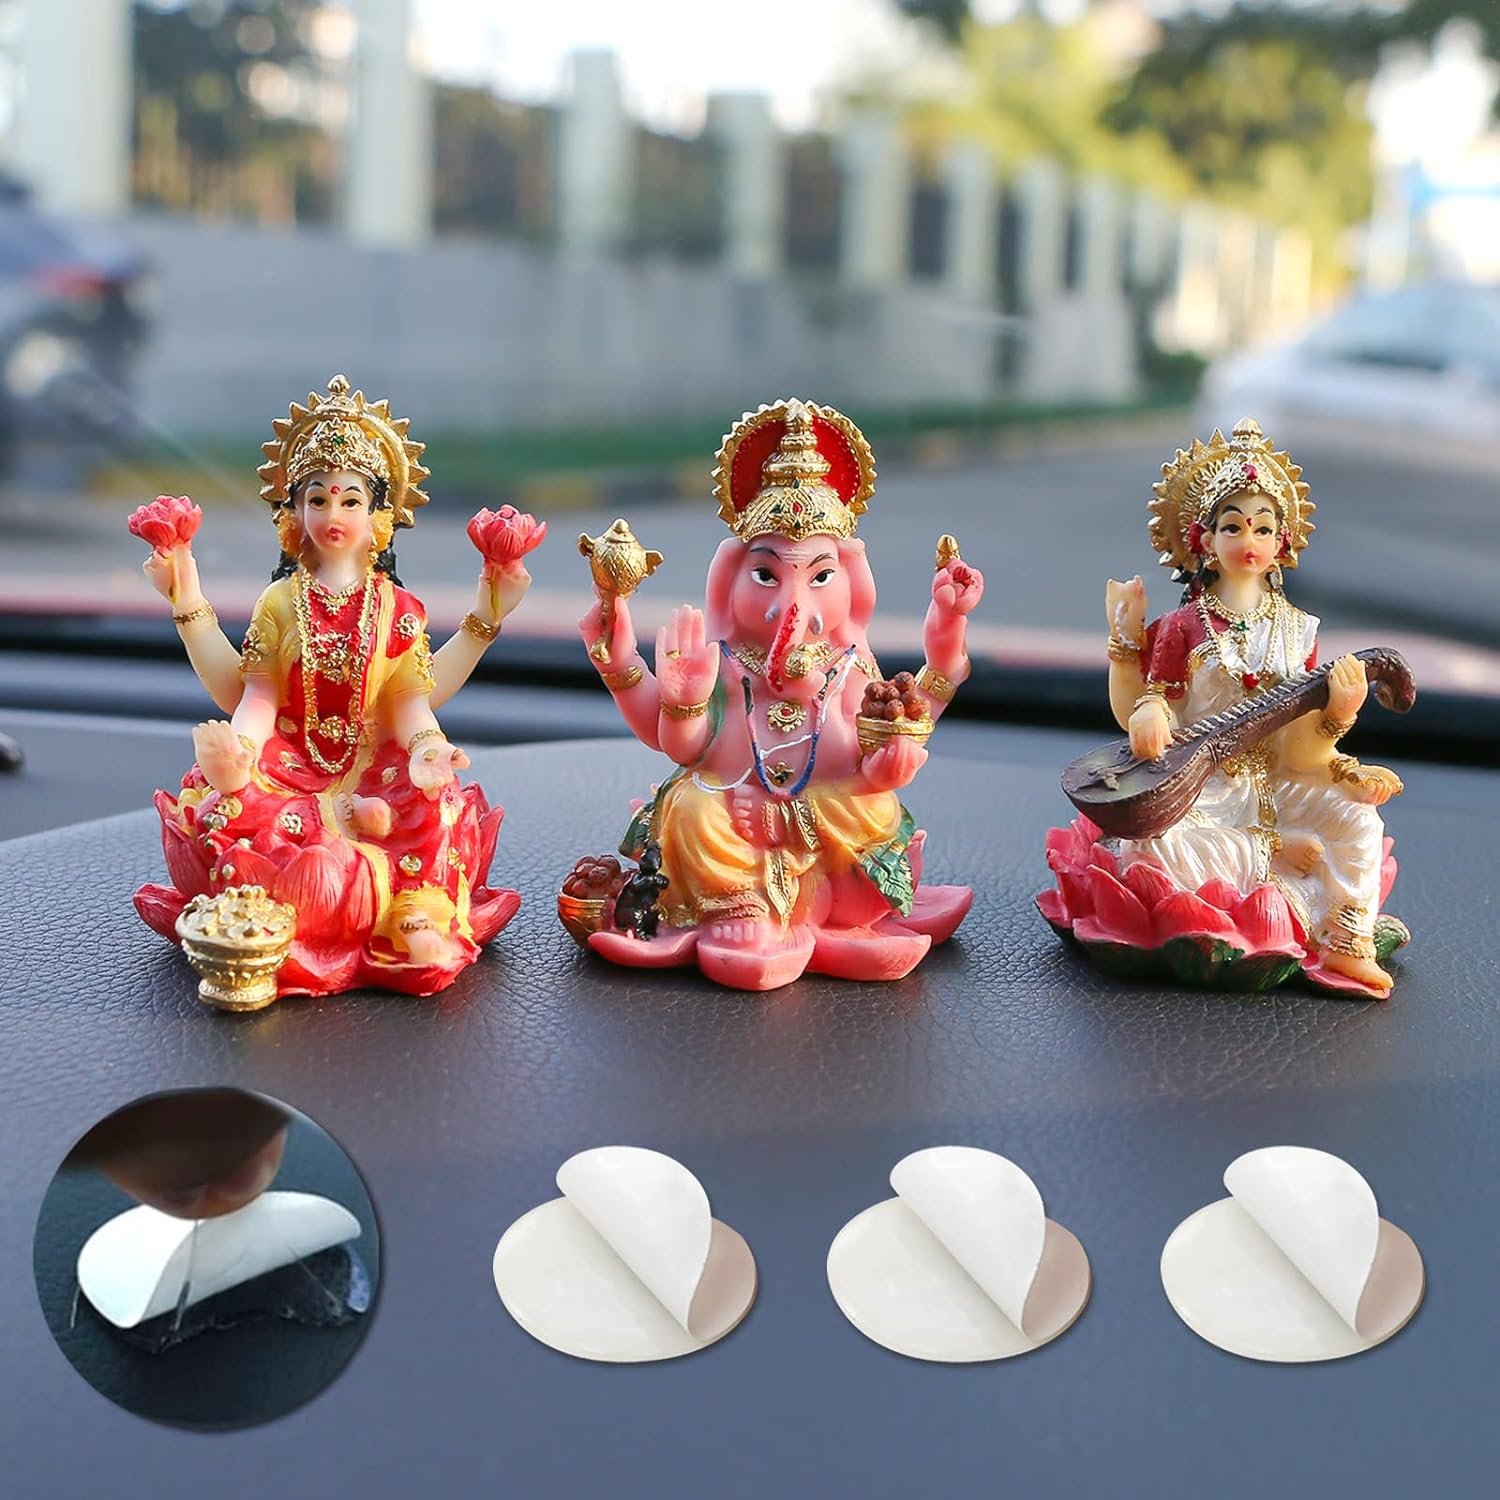 Hindu Laxmi Ganesh Saraswati Statue - 2.5”H India God Lakshmi Ganesha Figurine for Car Dashboard Decor Indian Wedding Baby Shower Return Gifts Diwali Gifts Home Office Pooja Item